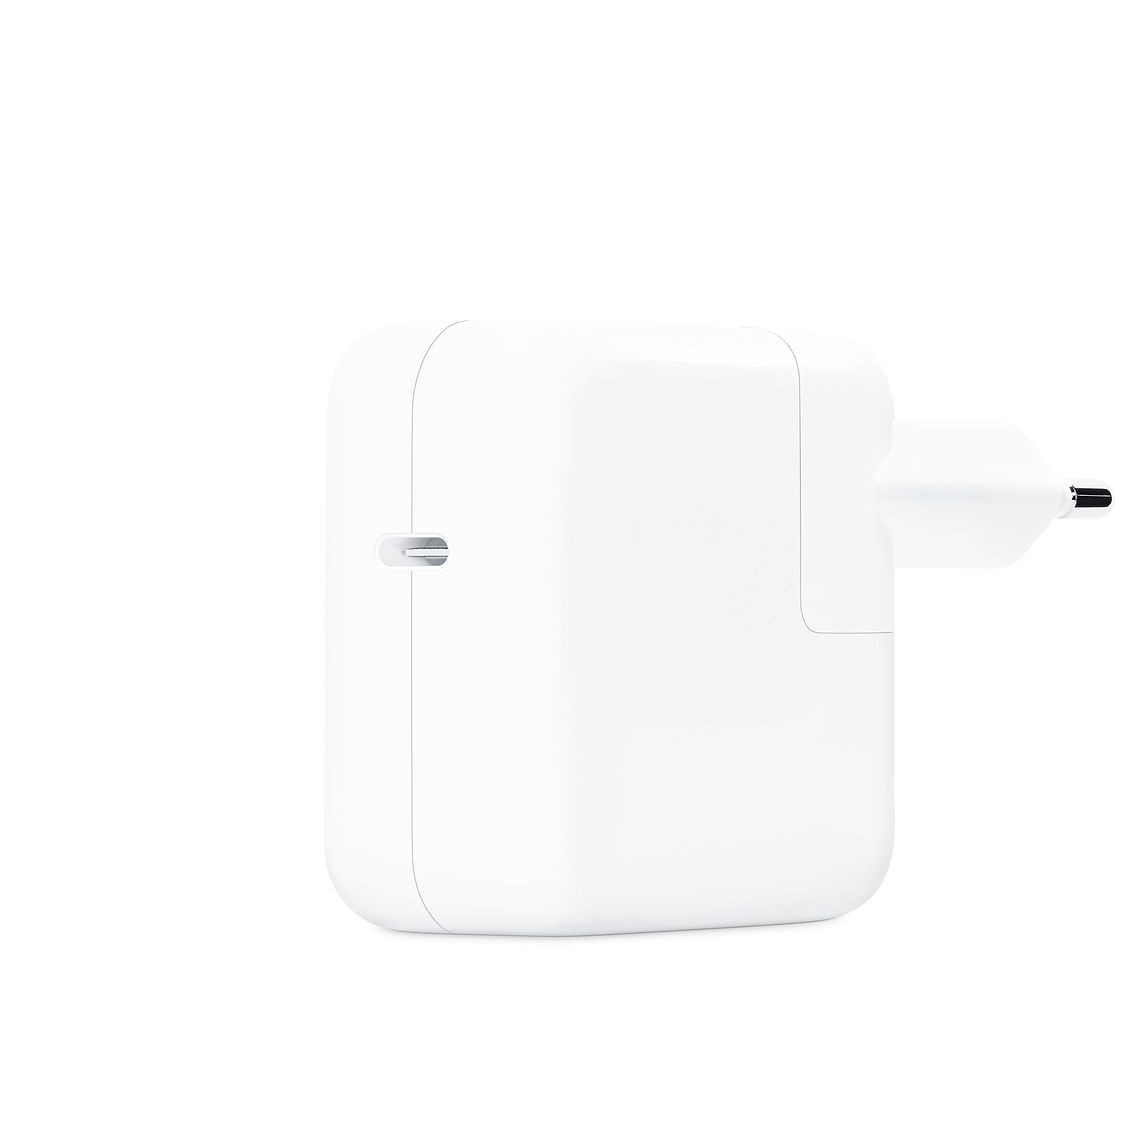 Adaptor de alimentare USB-C Apple de 87W - mag-genius-accesorii